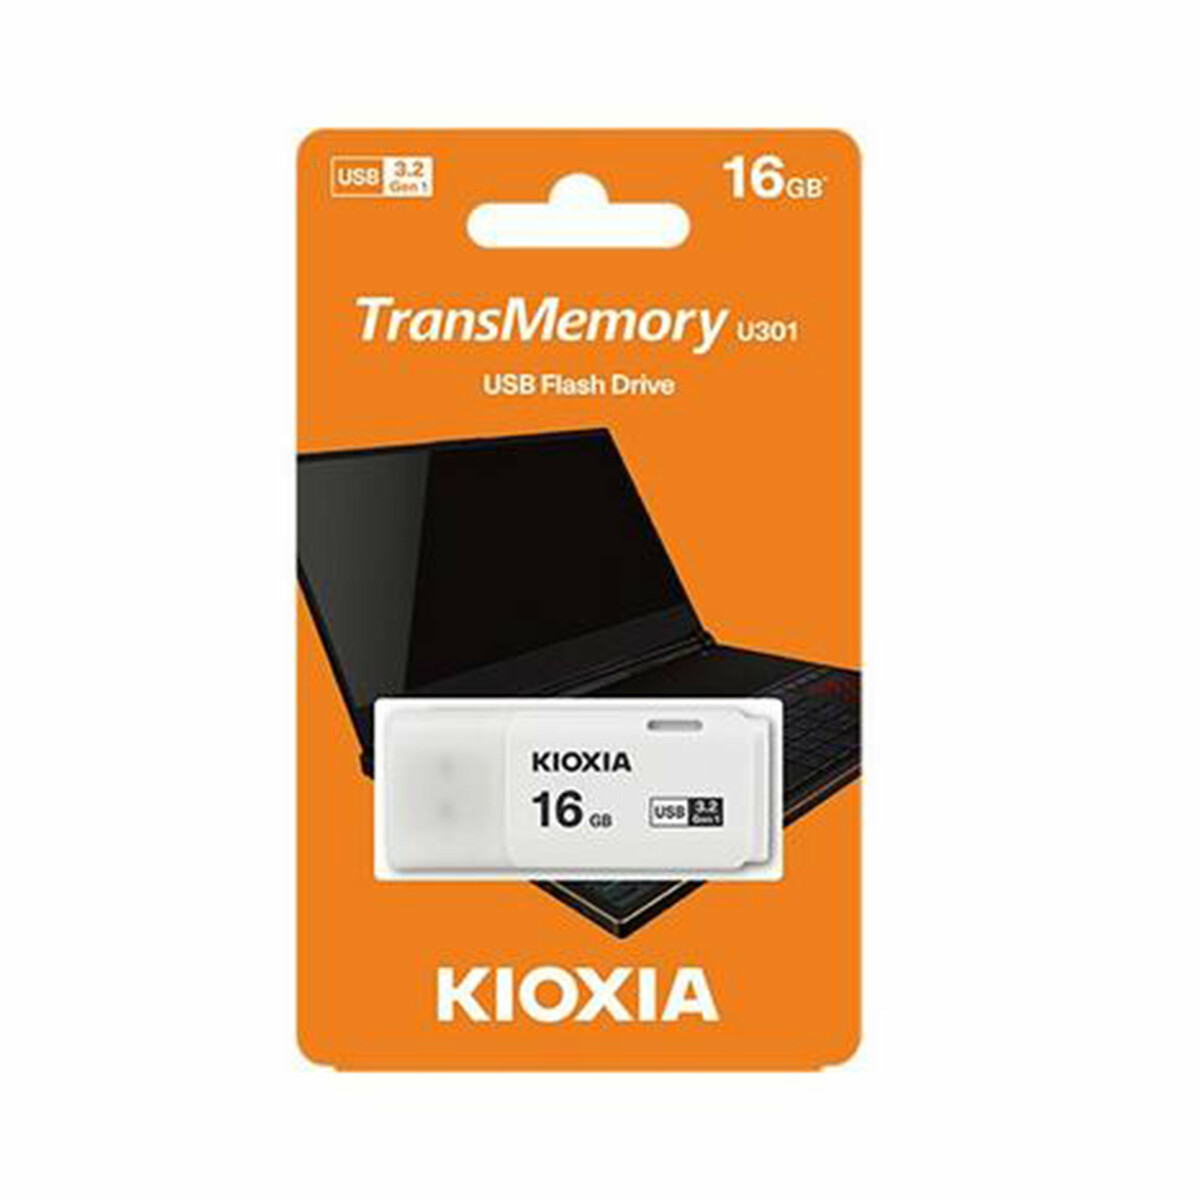 Kioxia TransMemory U301W 16GB